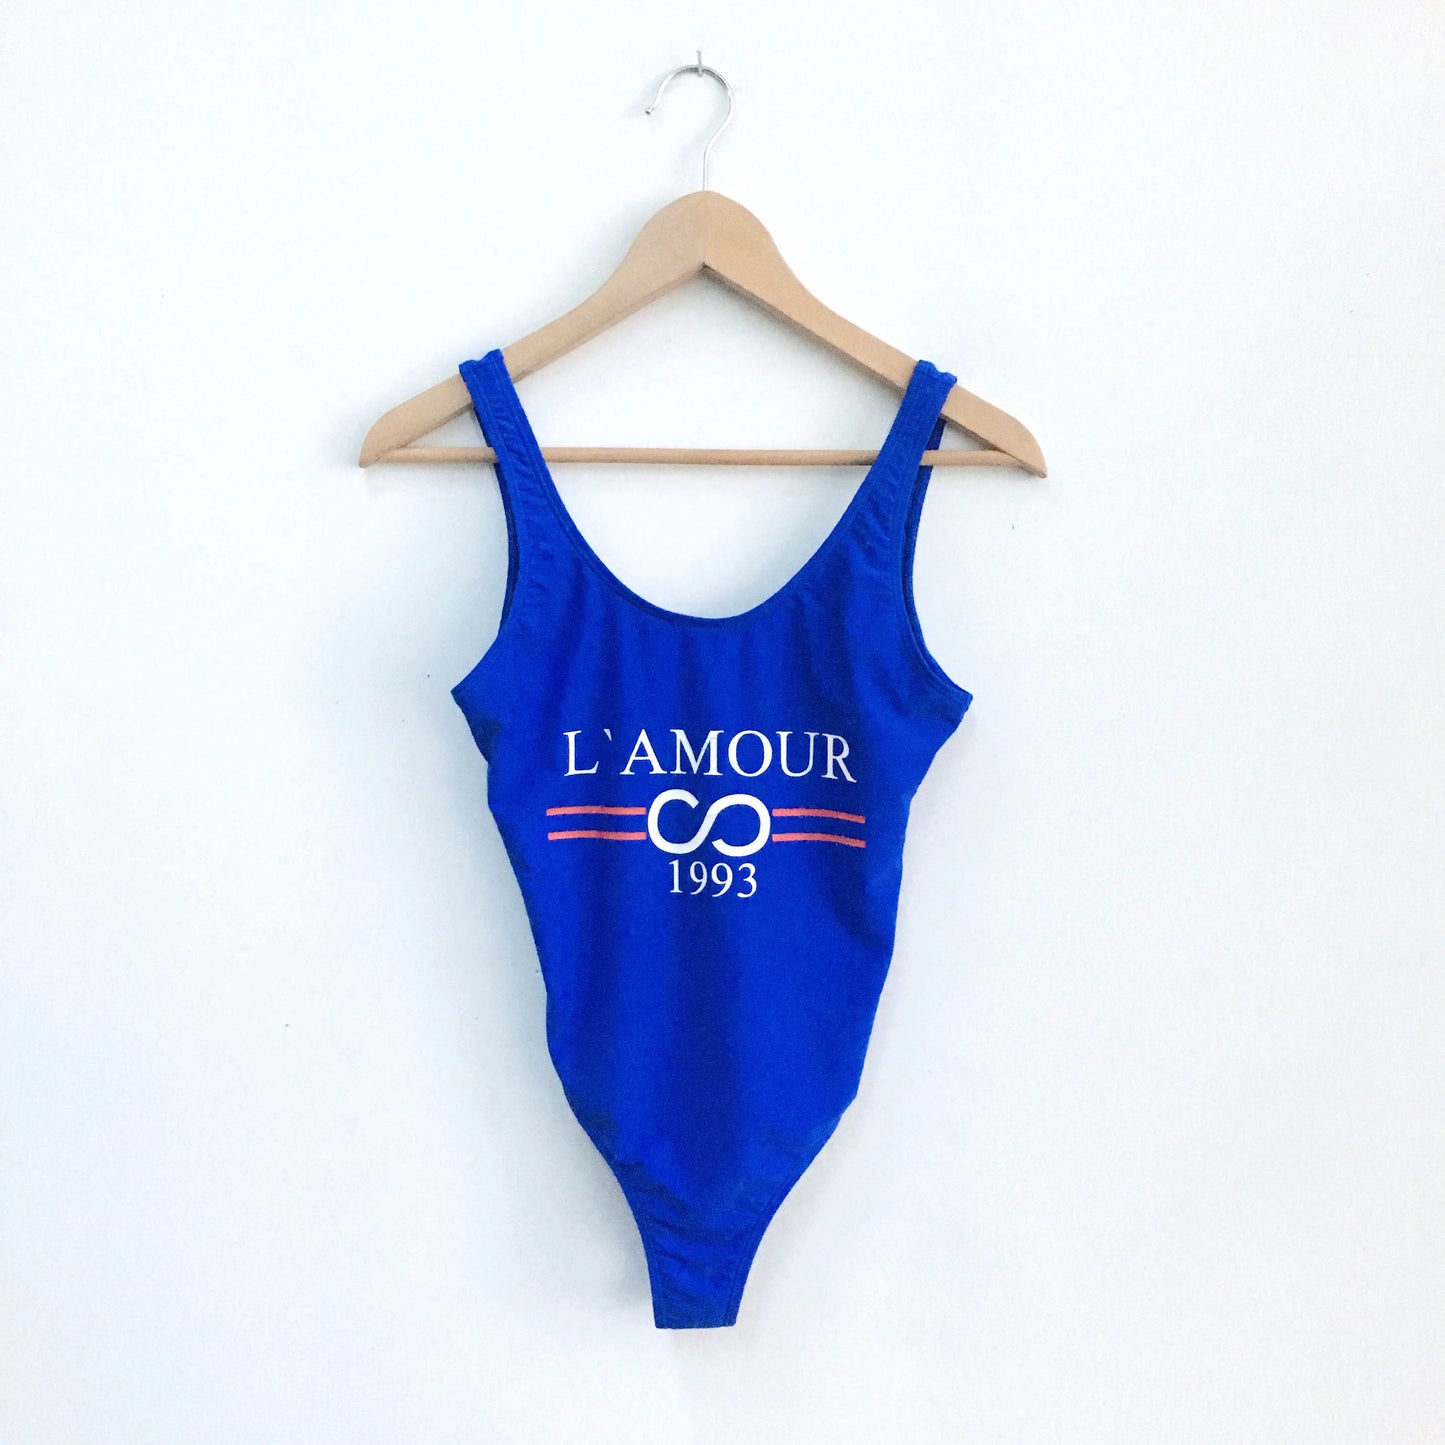 Primark L'amour one piece Bathing Suit - size 2